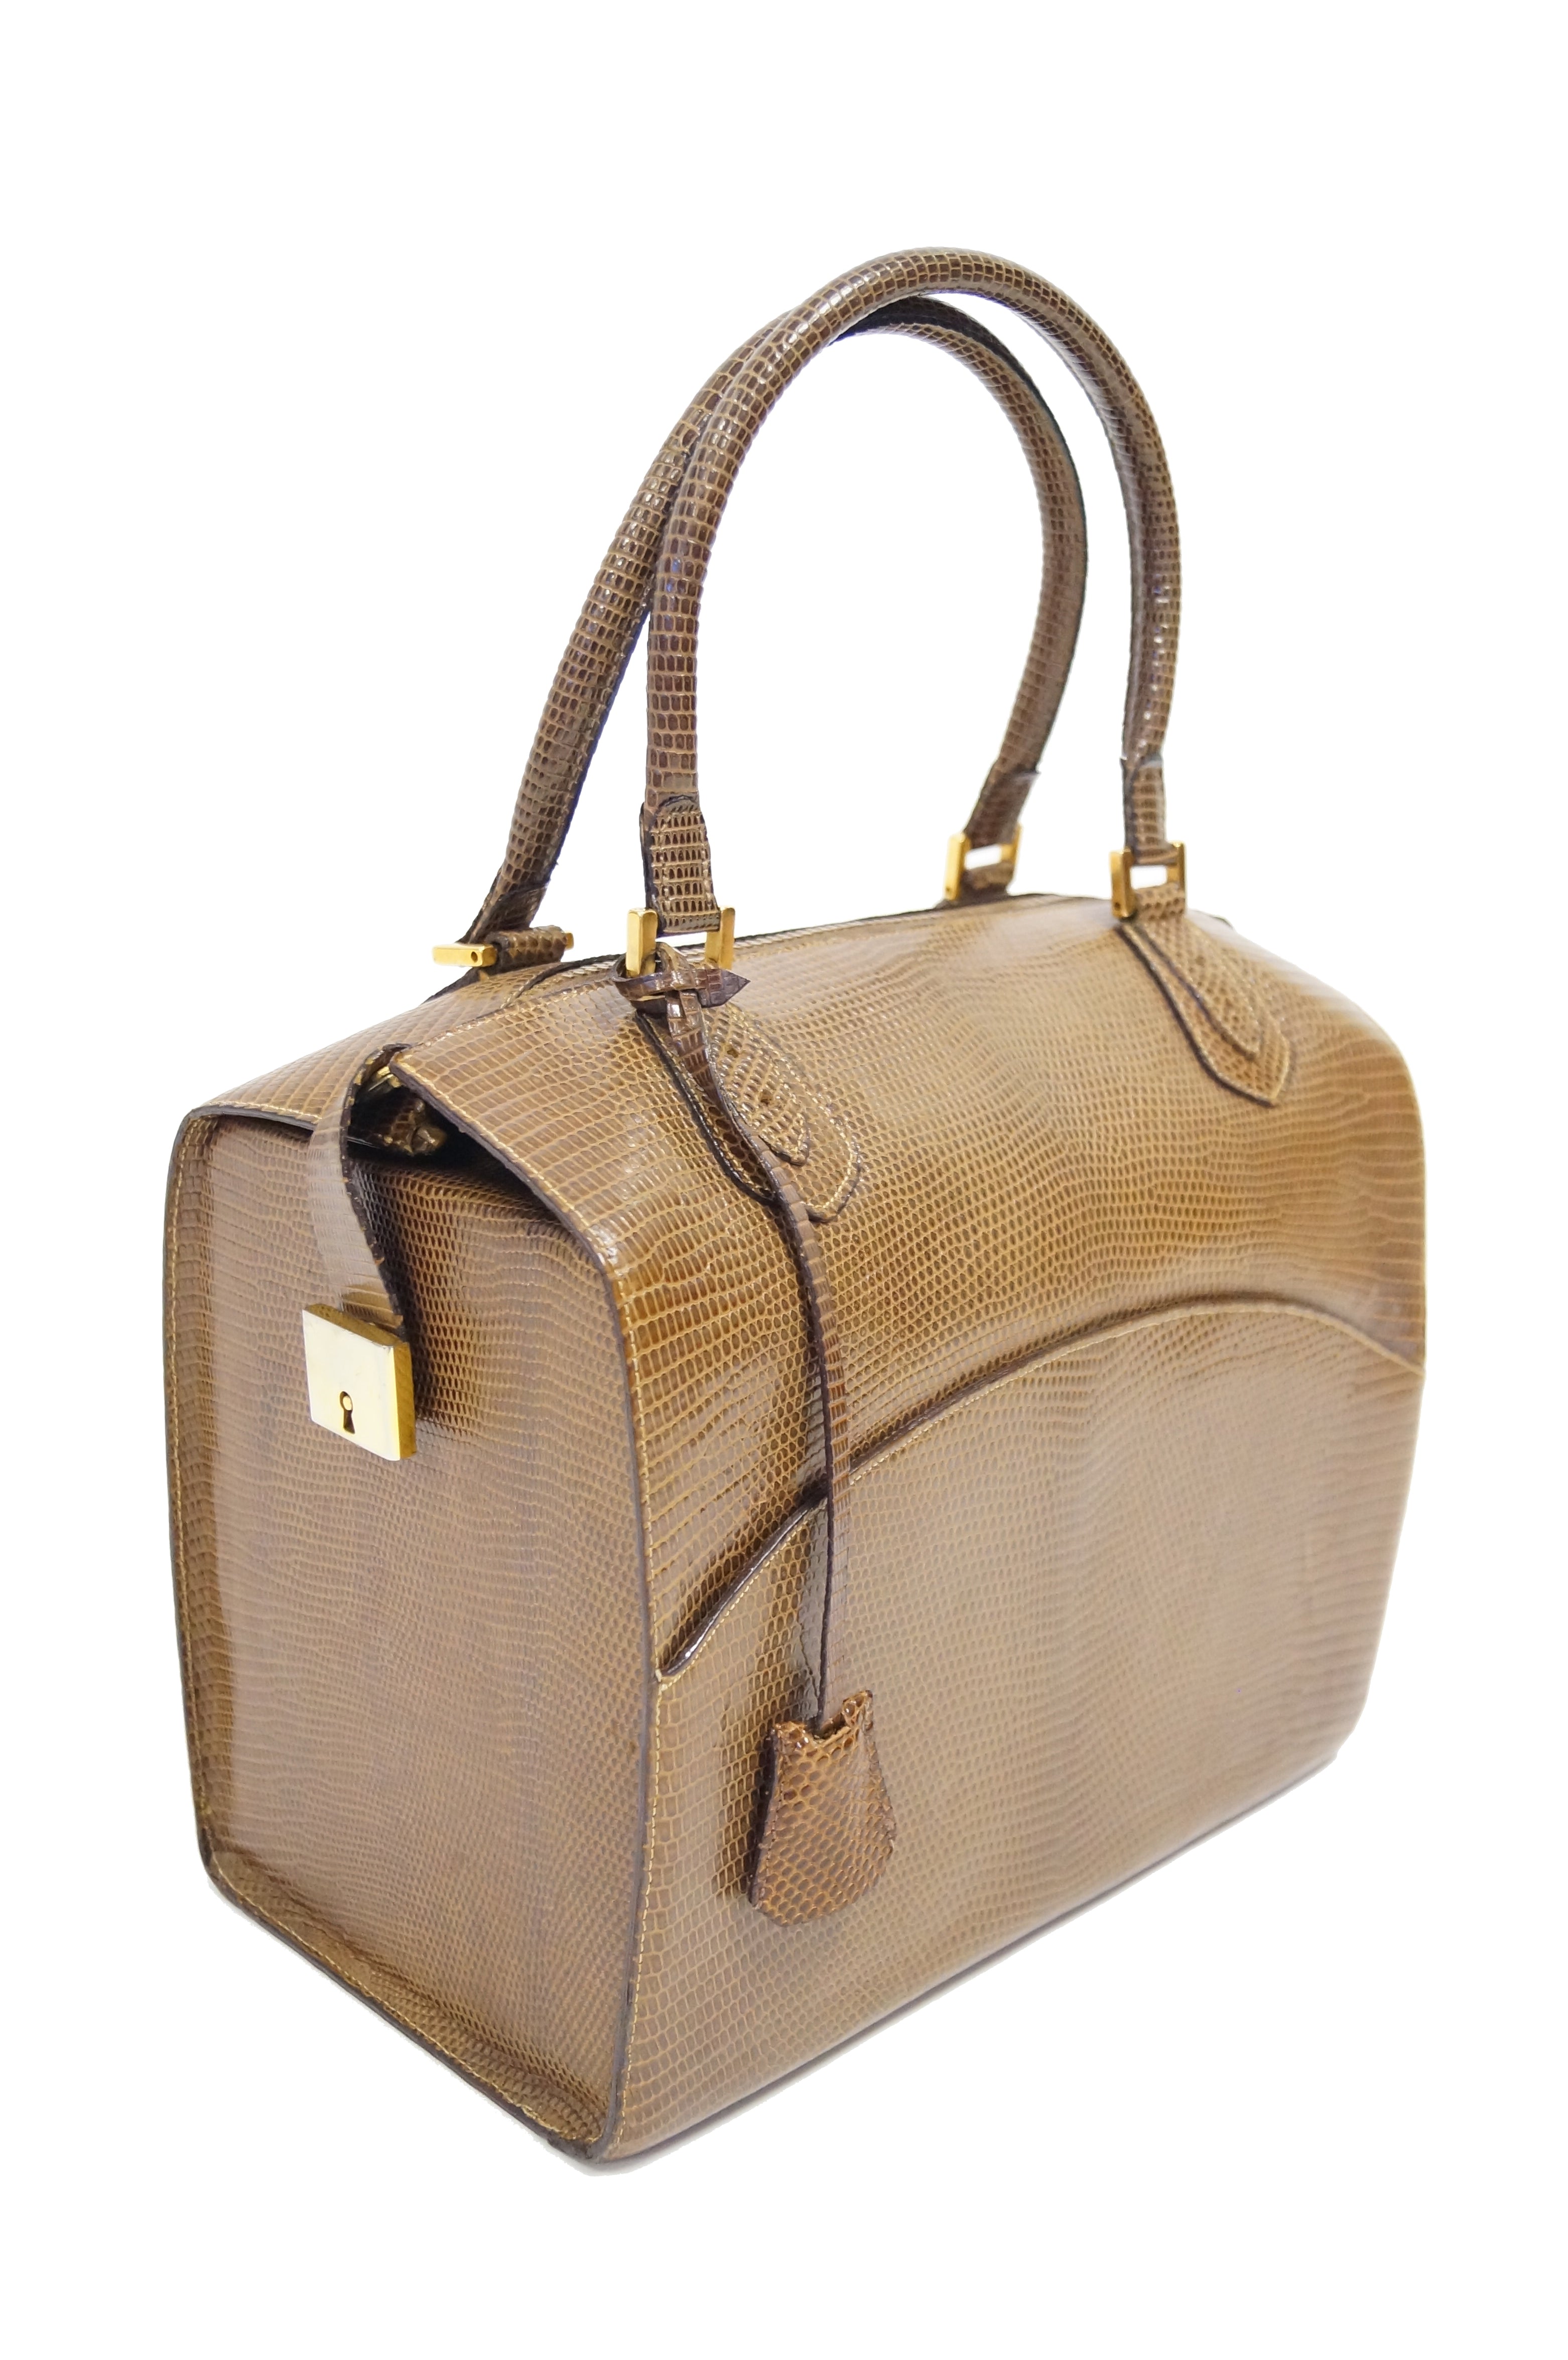 box bag purse